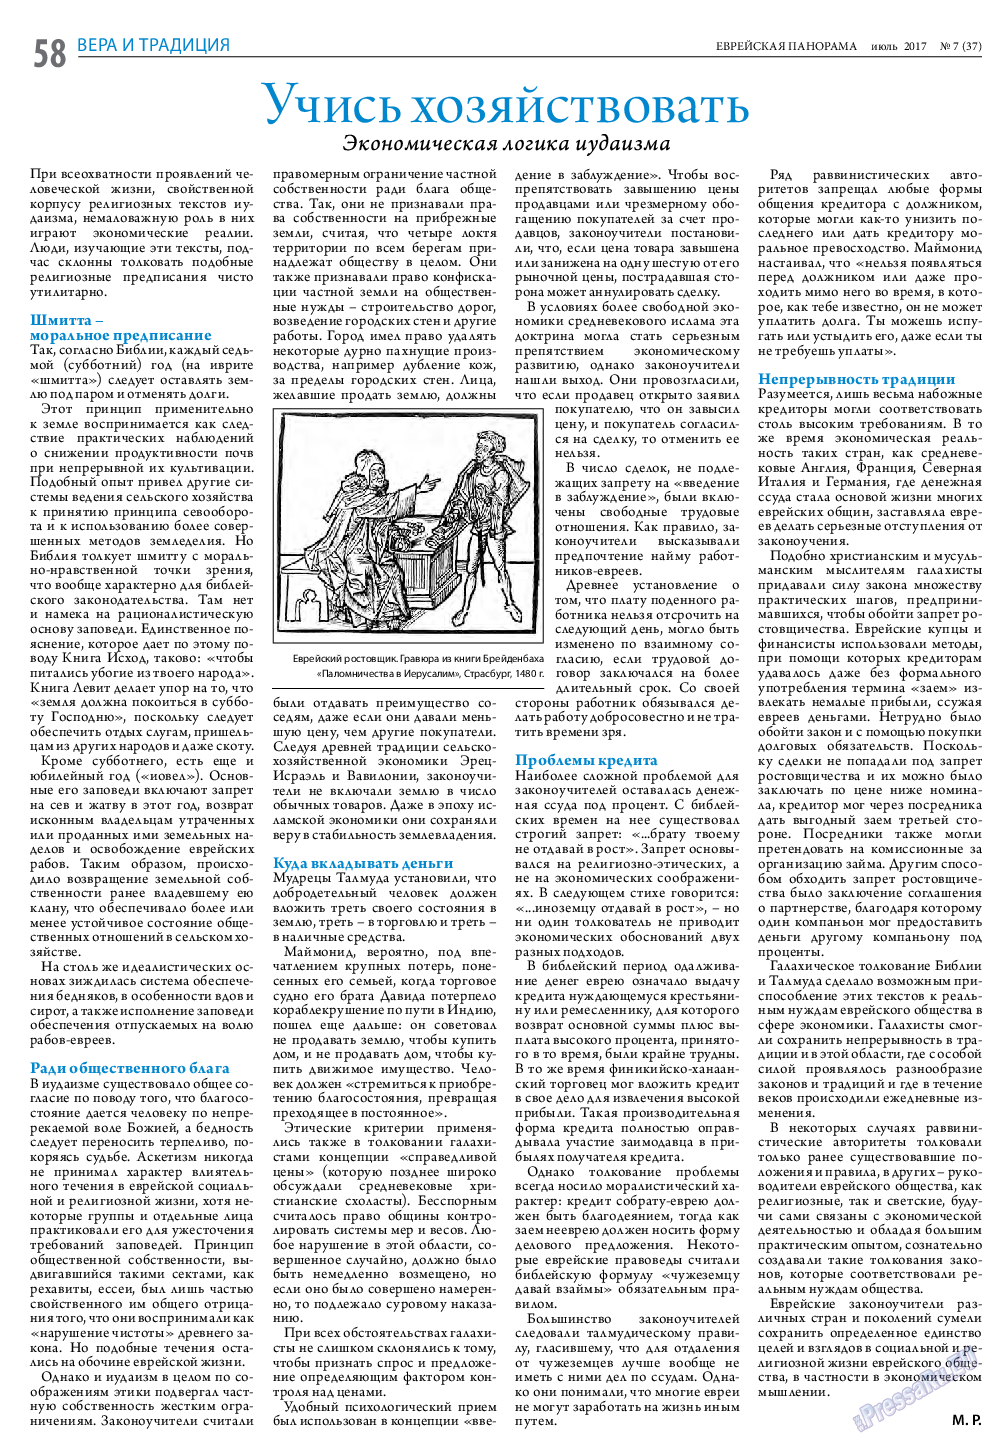 Еврейская панорама, газета. 2017 №7 стр.58